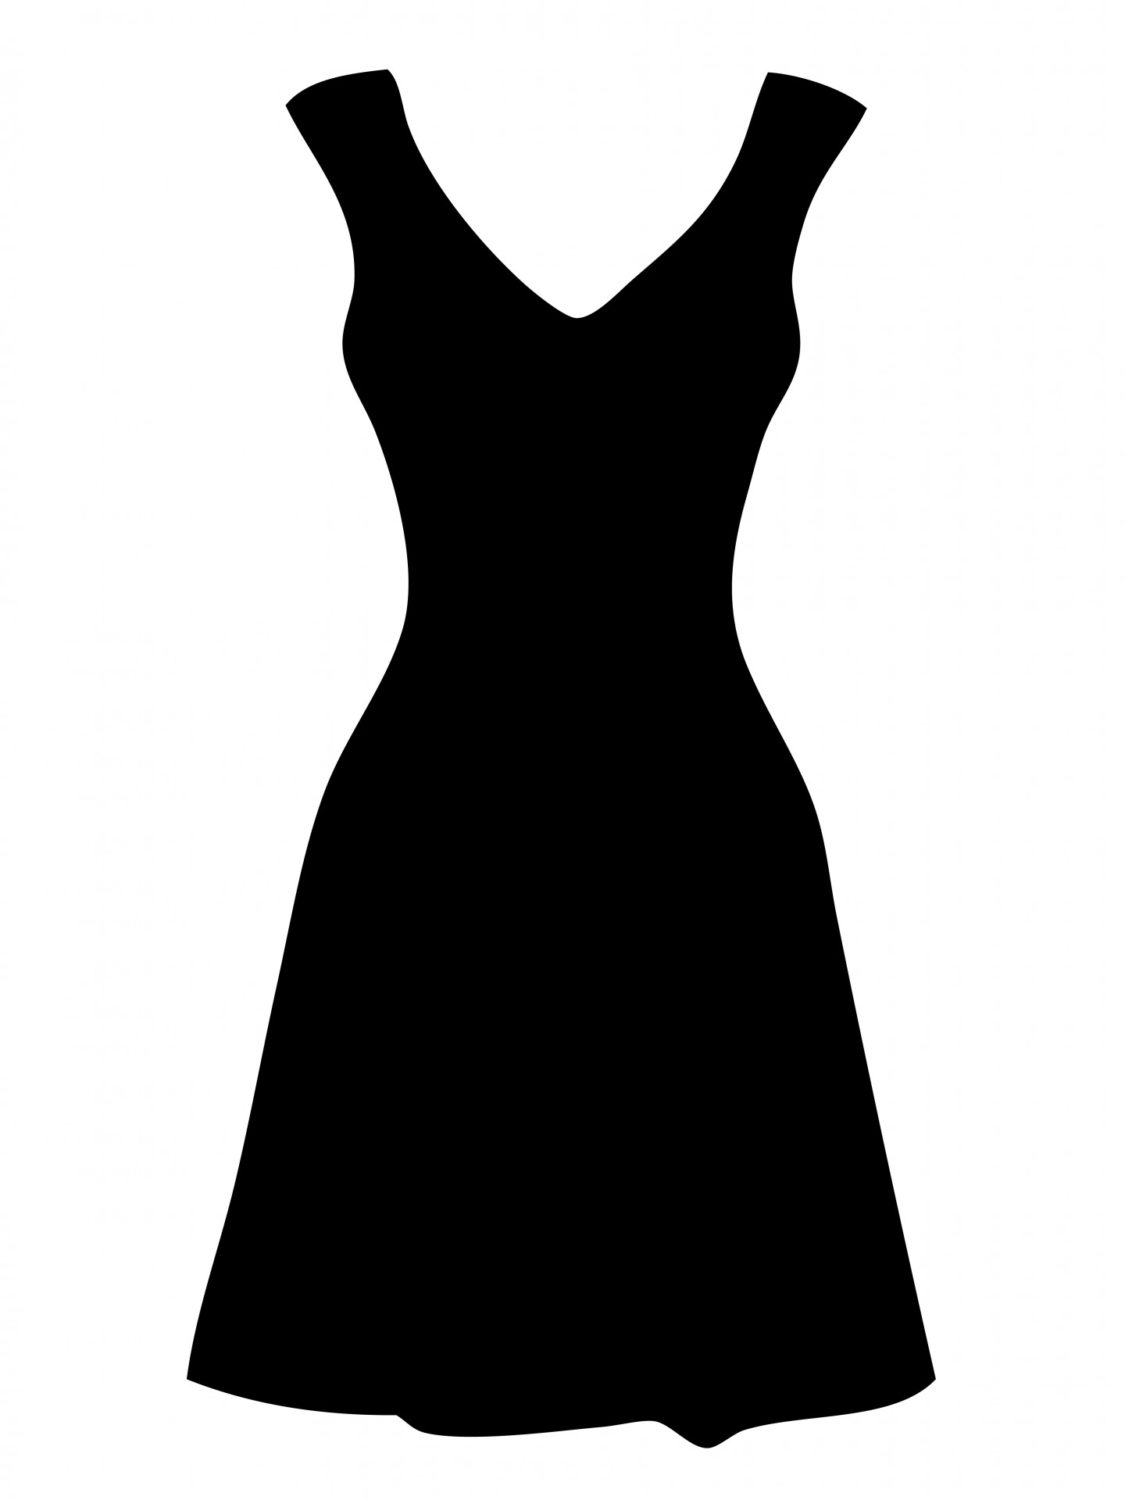 black-dress-clipart - Missi Balison Fitness